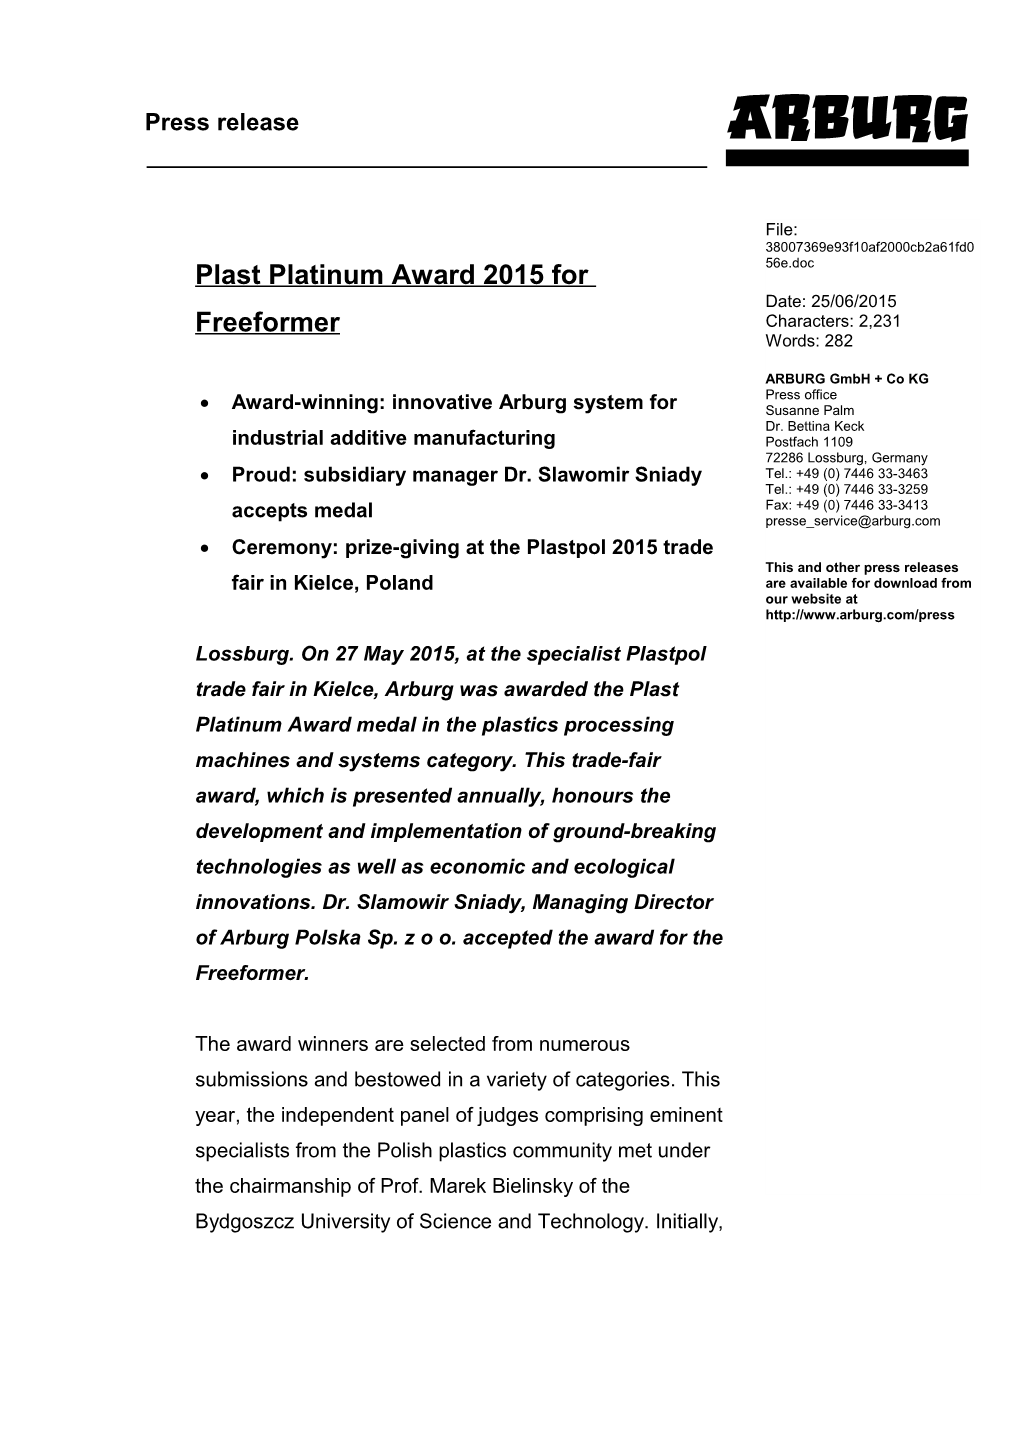 Plast Platinum Award 2015 for Freeformer